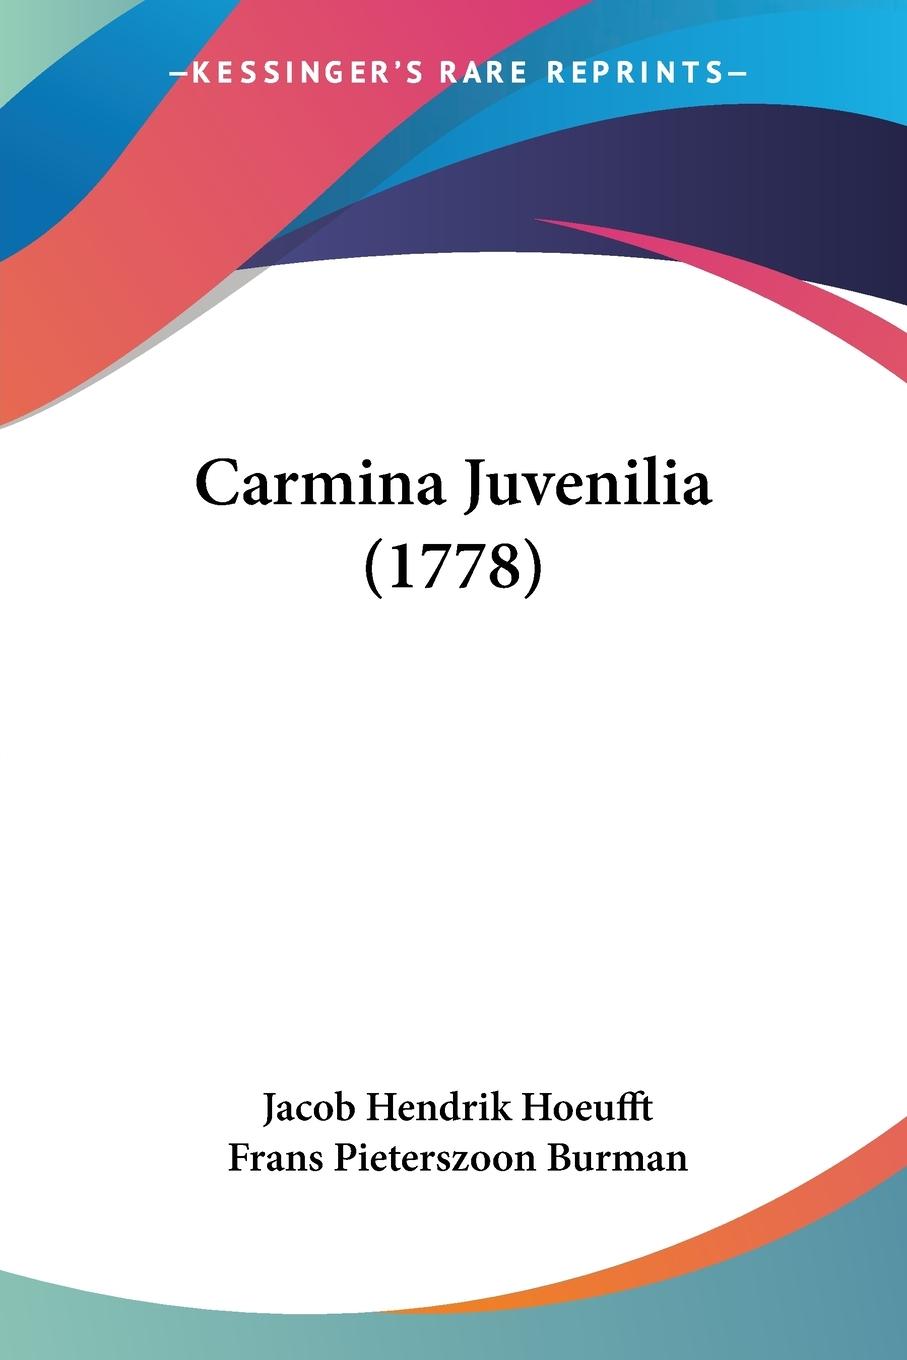 Carmina Juvenilia (1778) - Hoeufft, Jacob Hendrik Burman, Frans Pieterszoon